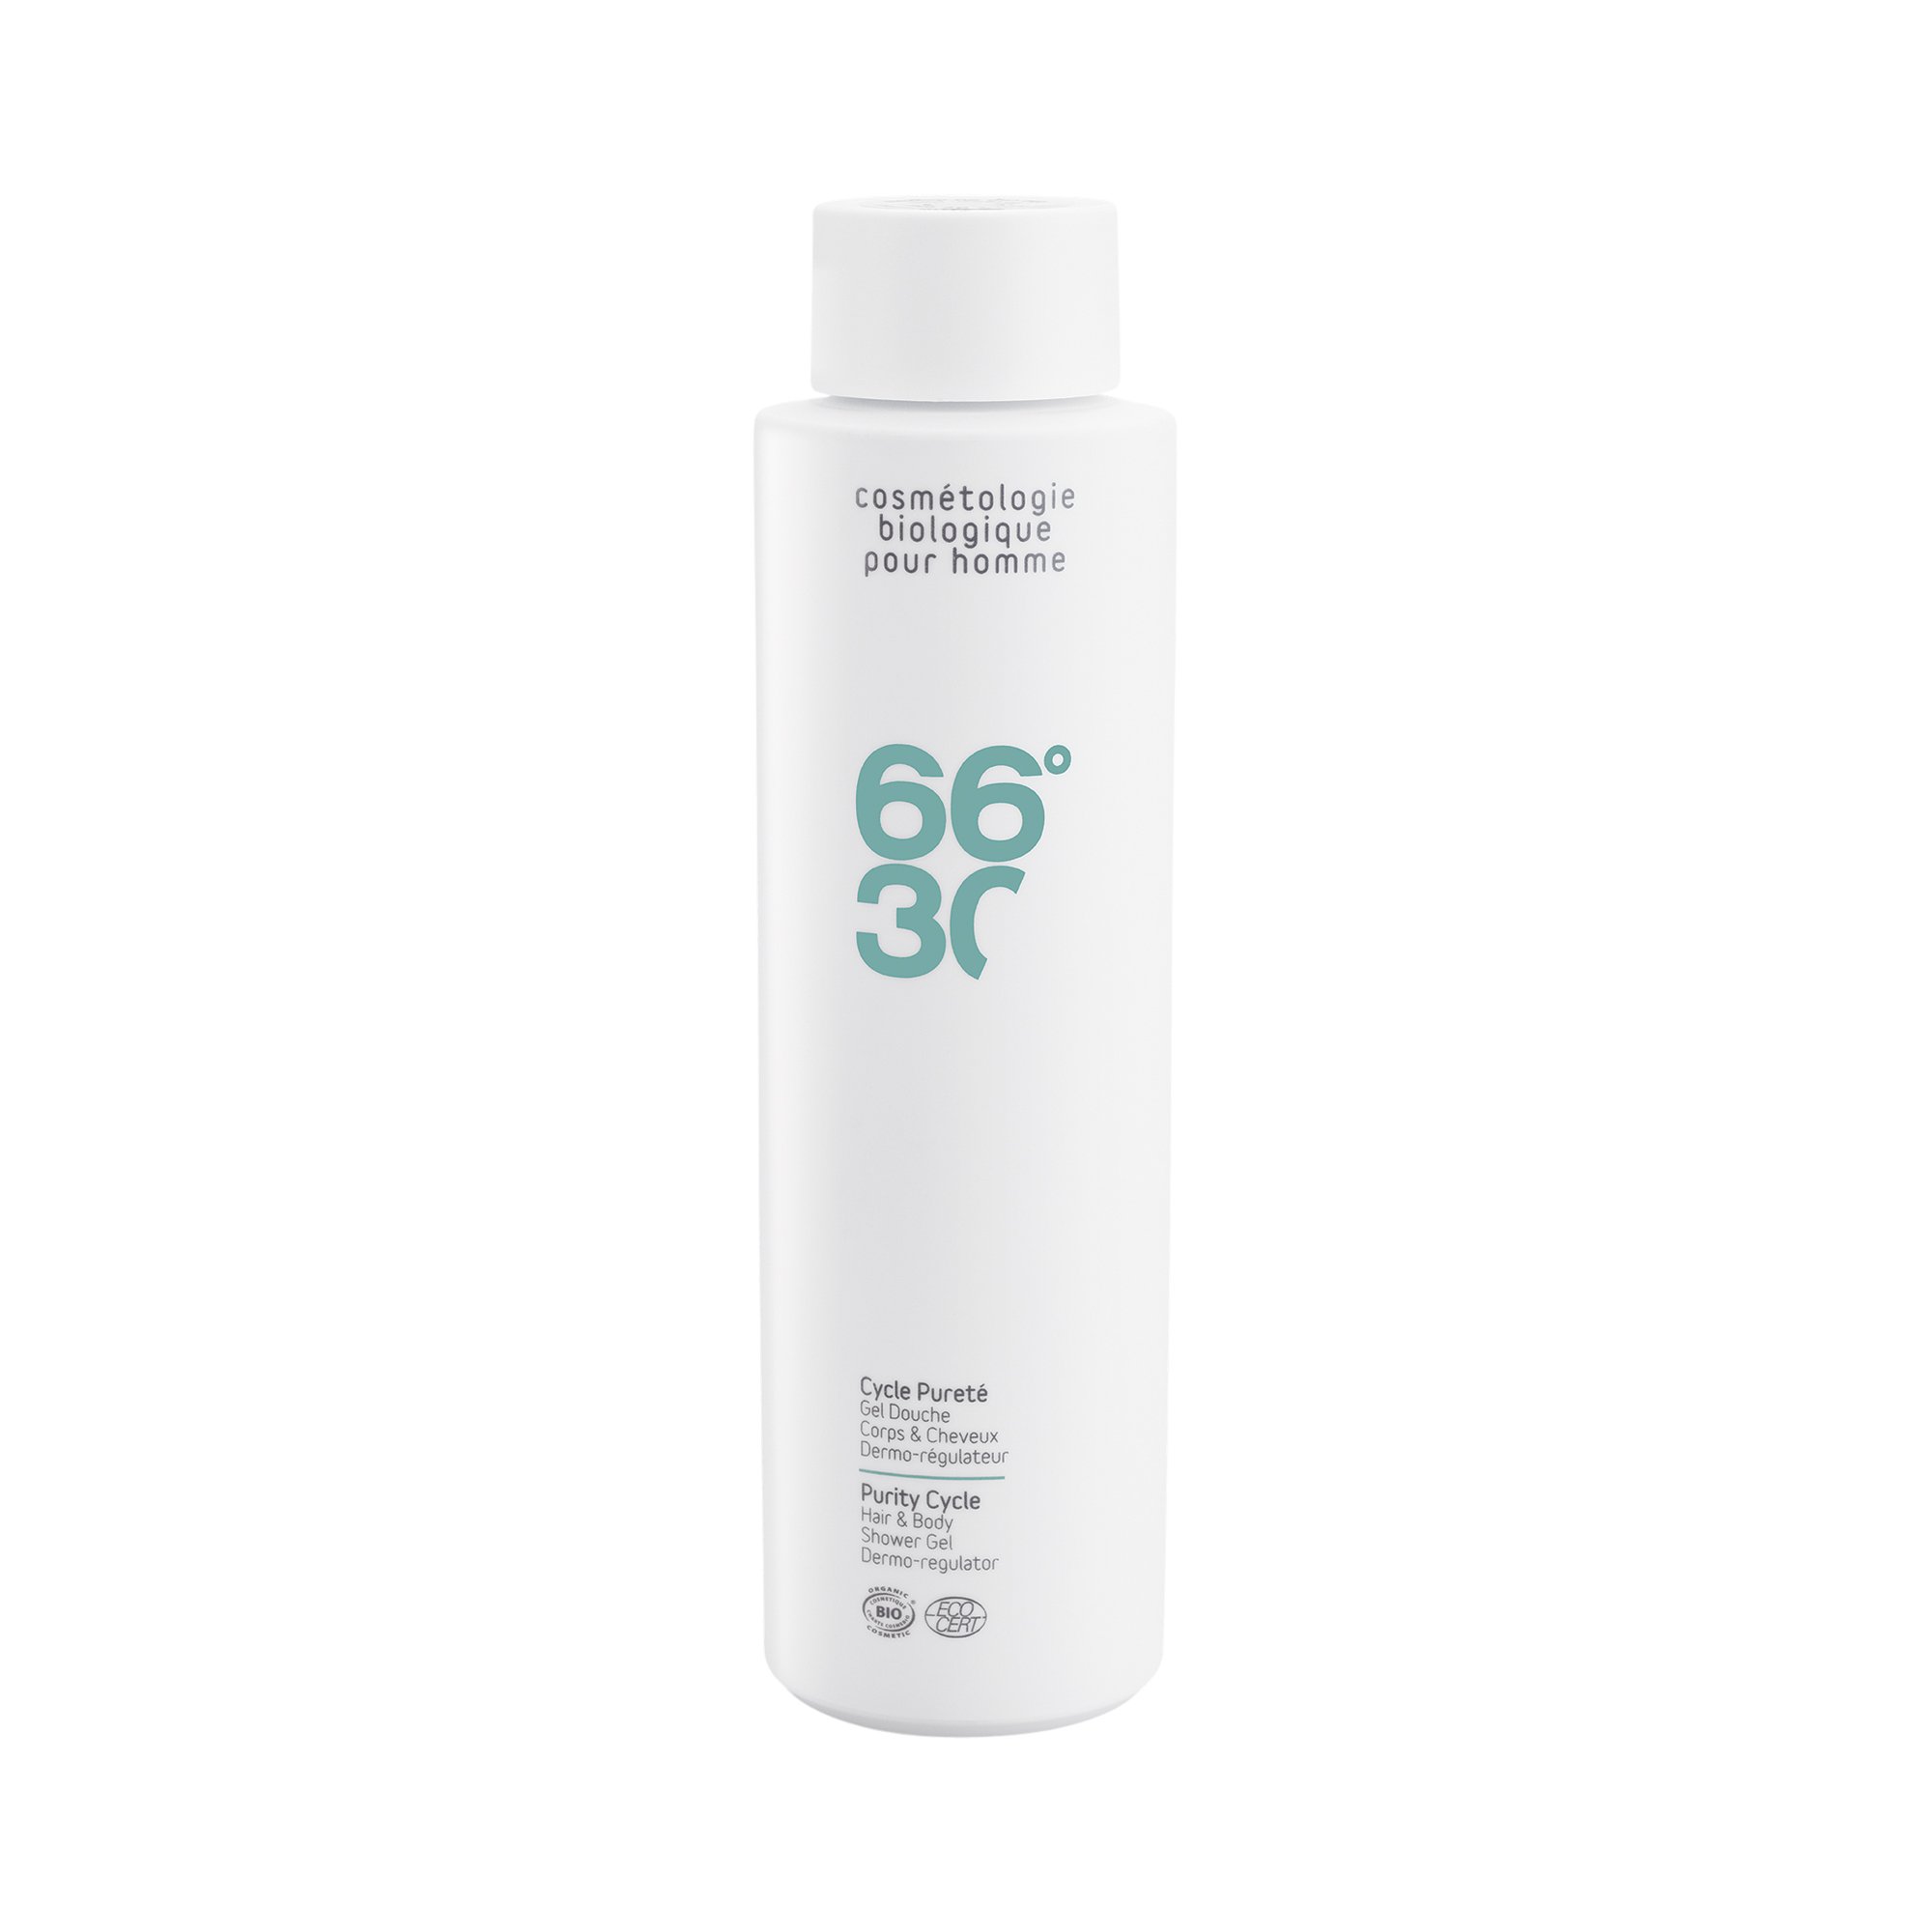 66°30 - Purity Cycle - Hair & Body Shower Gel